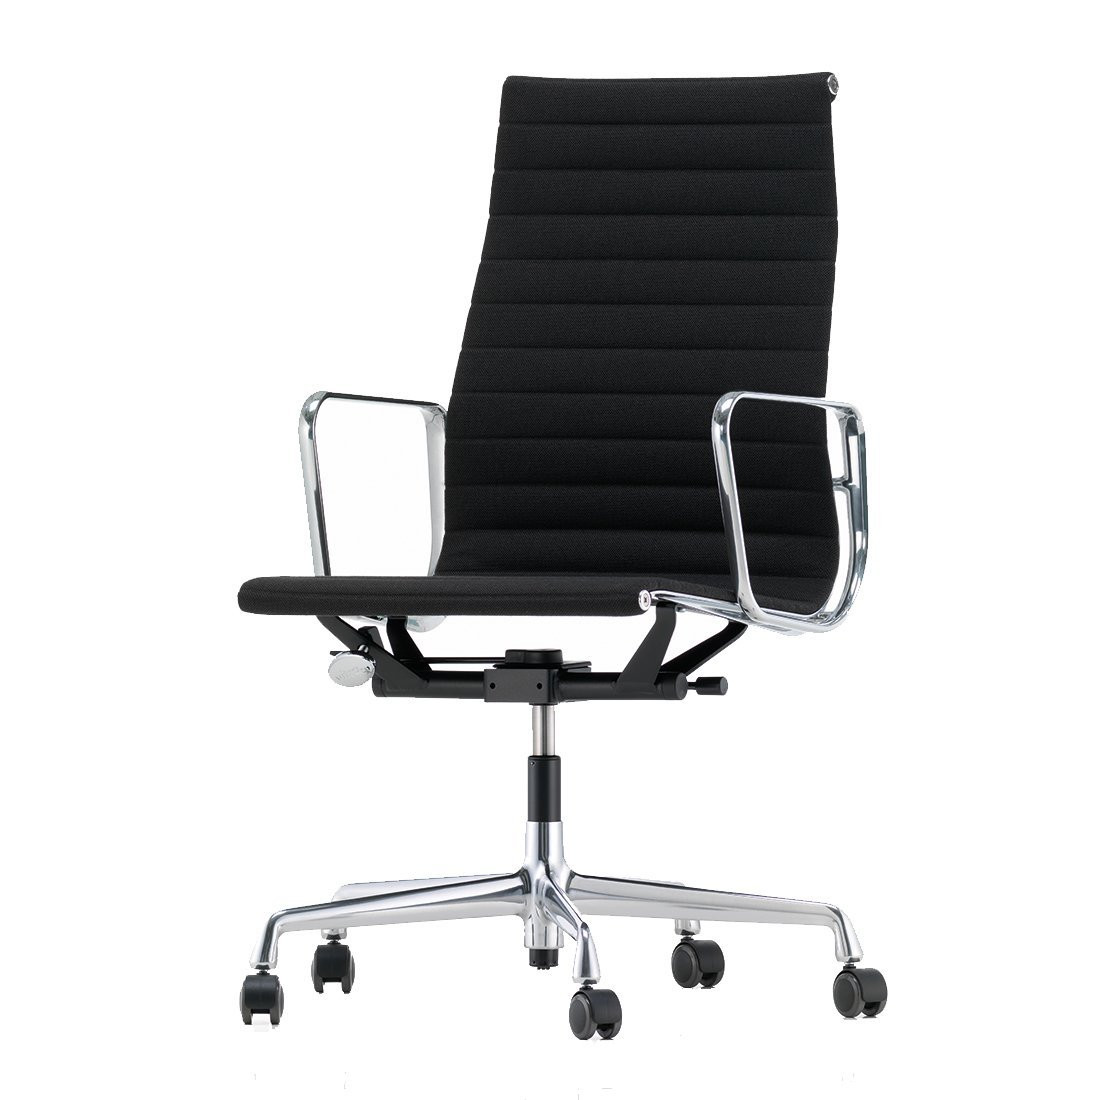 Vitra Aluminium Chair EA 119 Bureaustoel - Hopsack 66 Nero / Gepolijst Frame